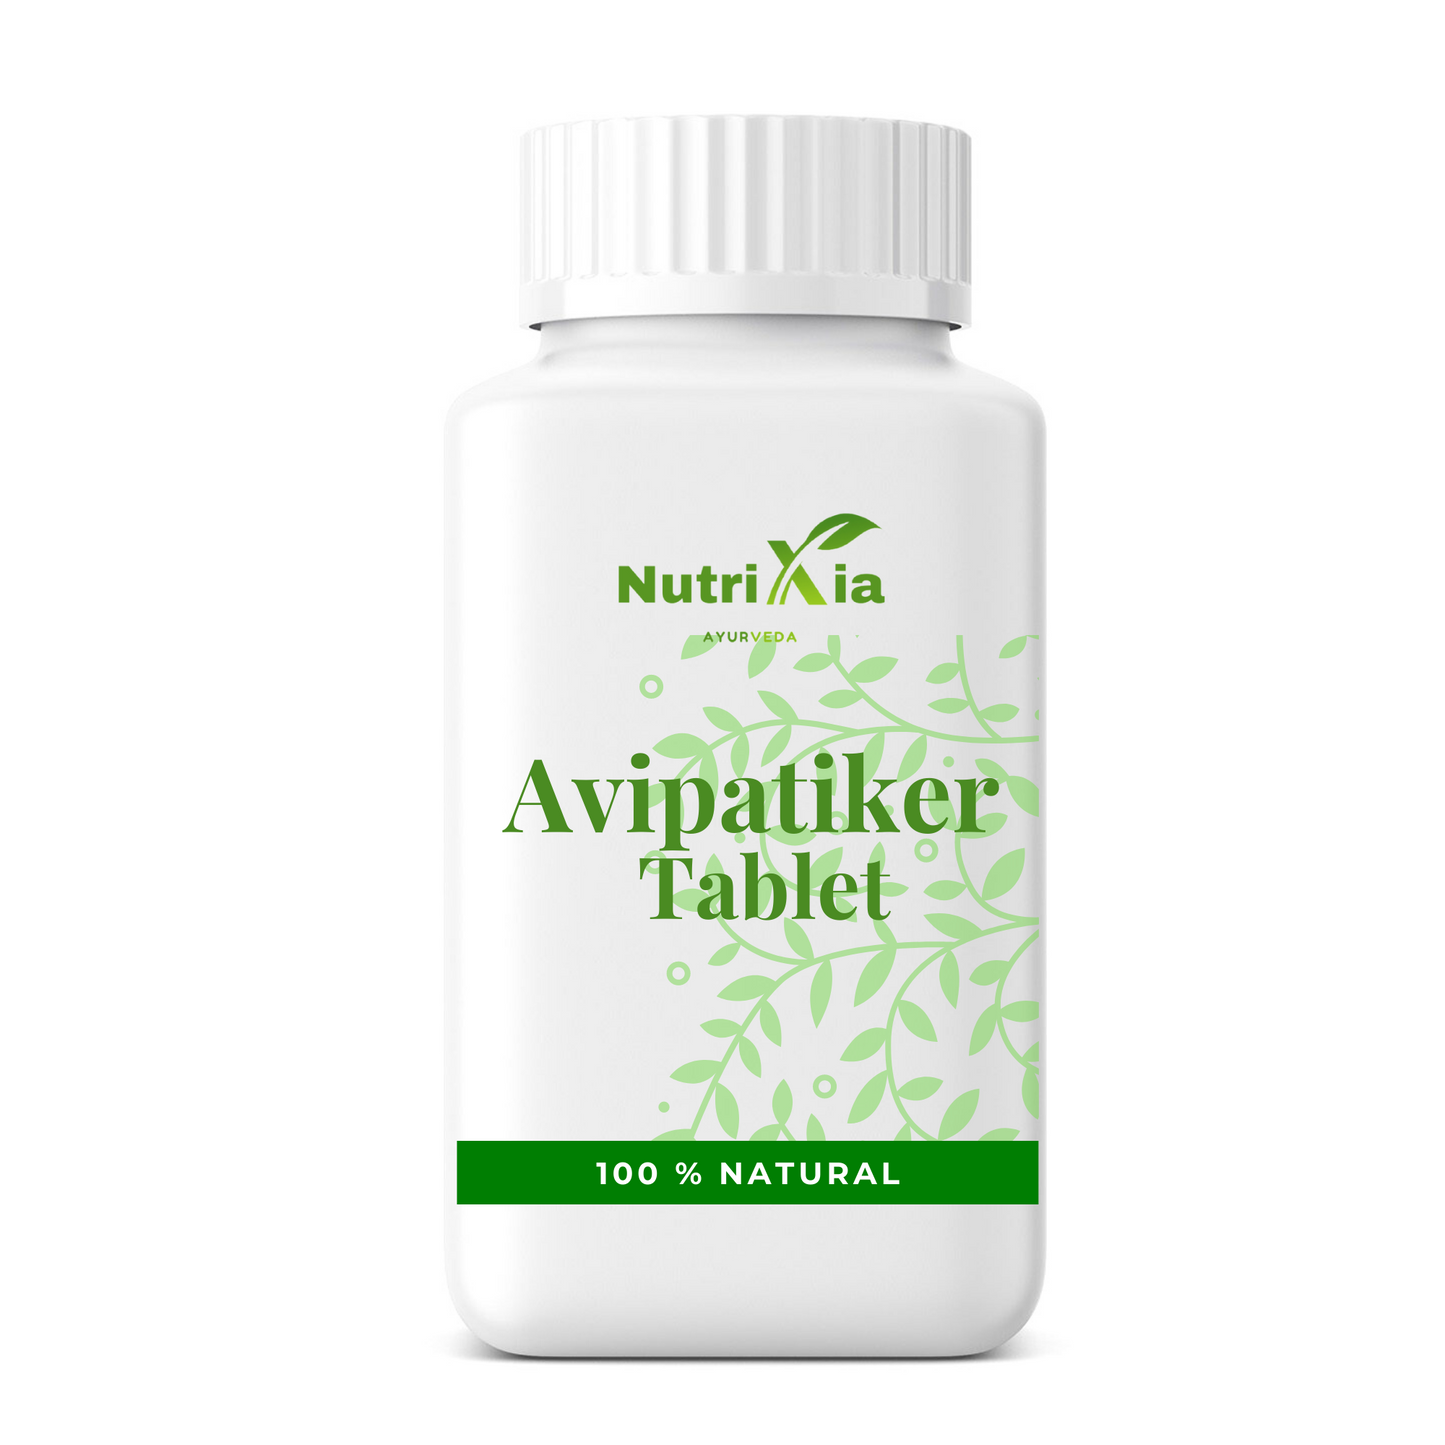 Avipattikar Tablet अविपट्टिकर Avipatiker Tablets -Nutrixia Food